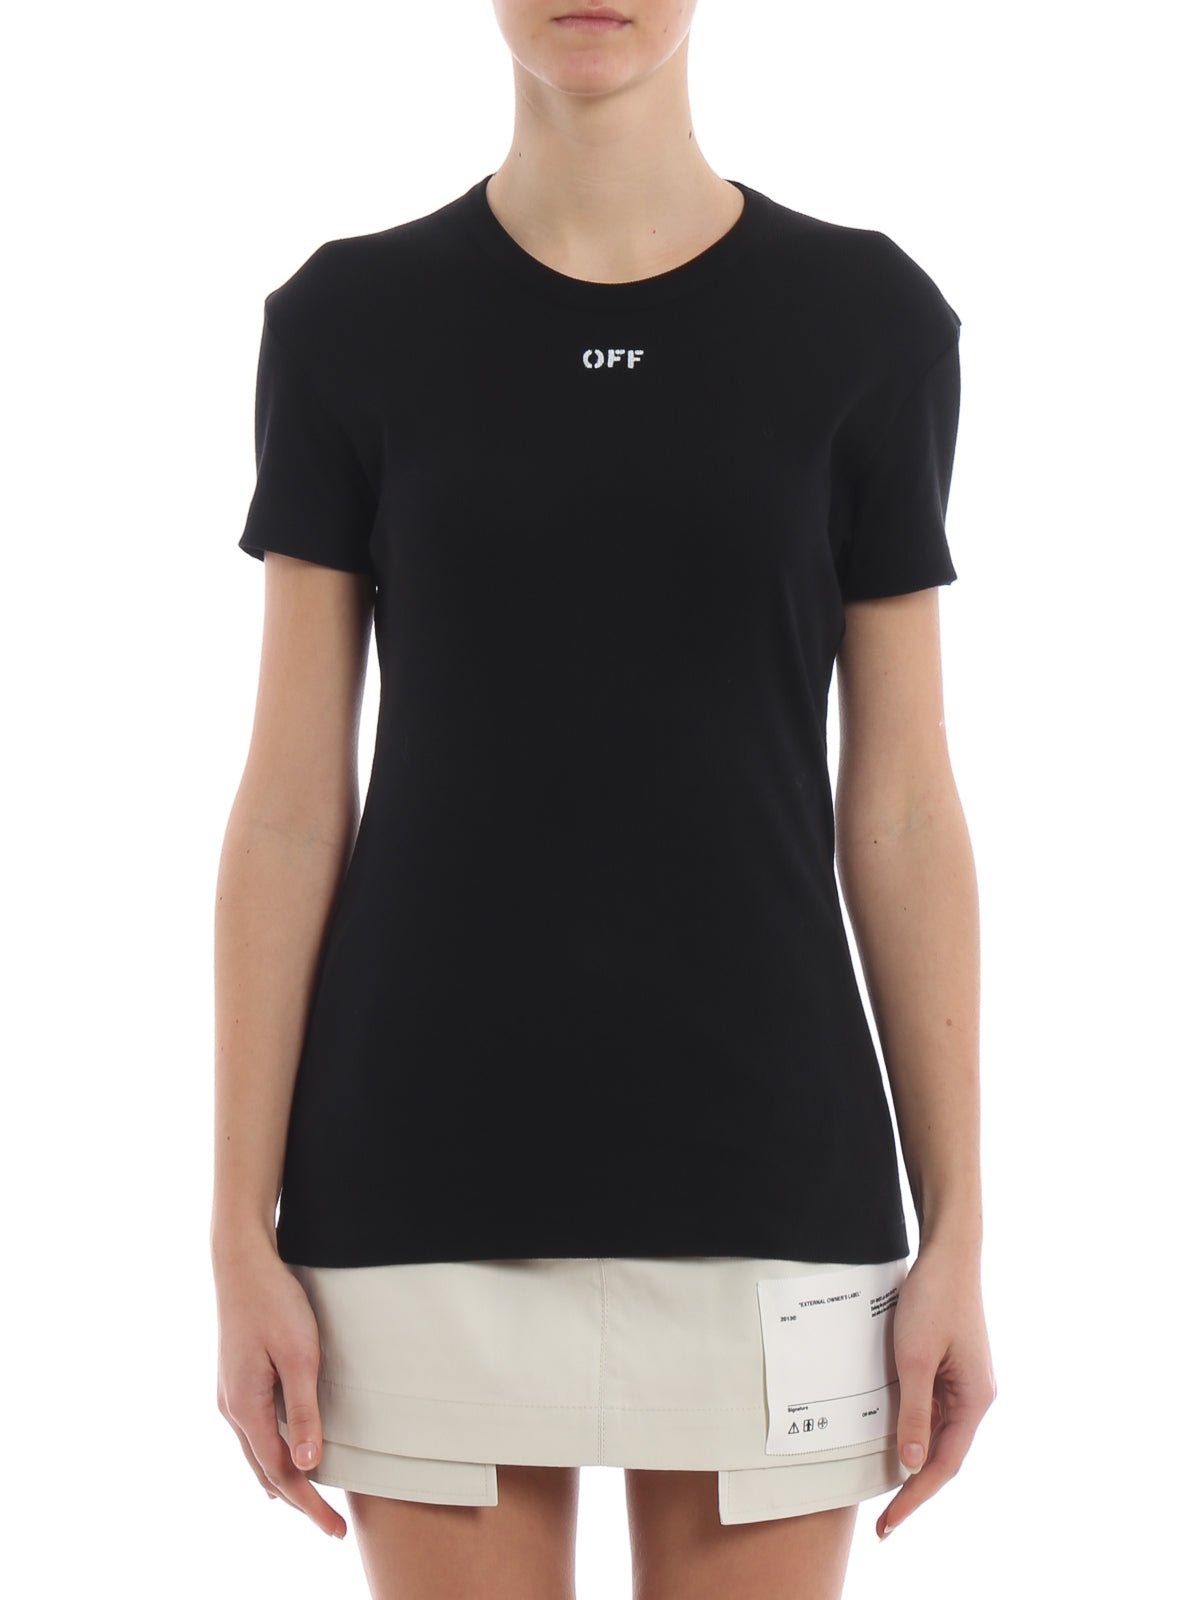 Off-White Black Modal Tops & T-Shirt - Fizigo